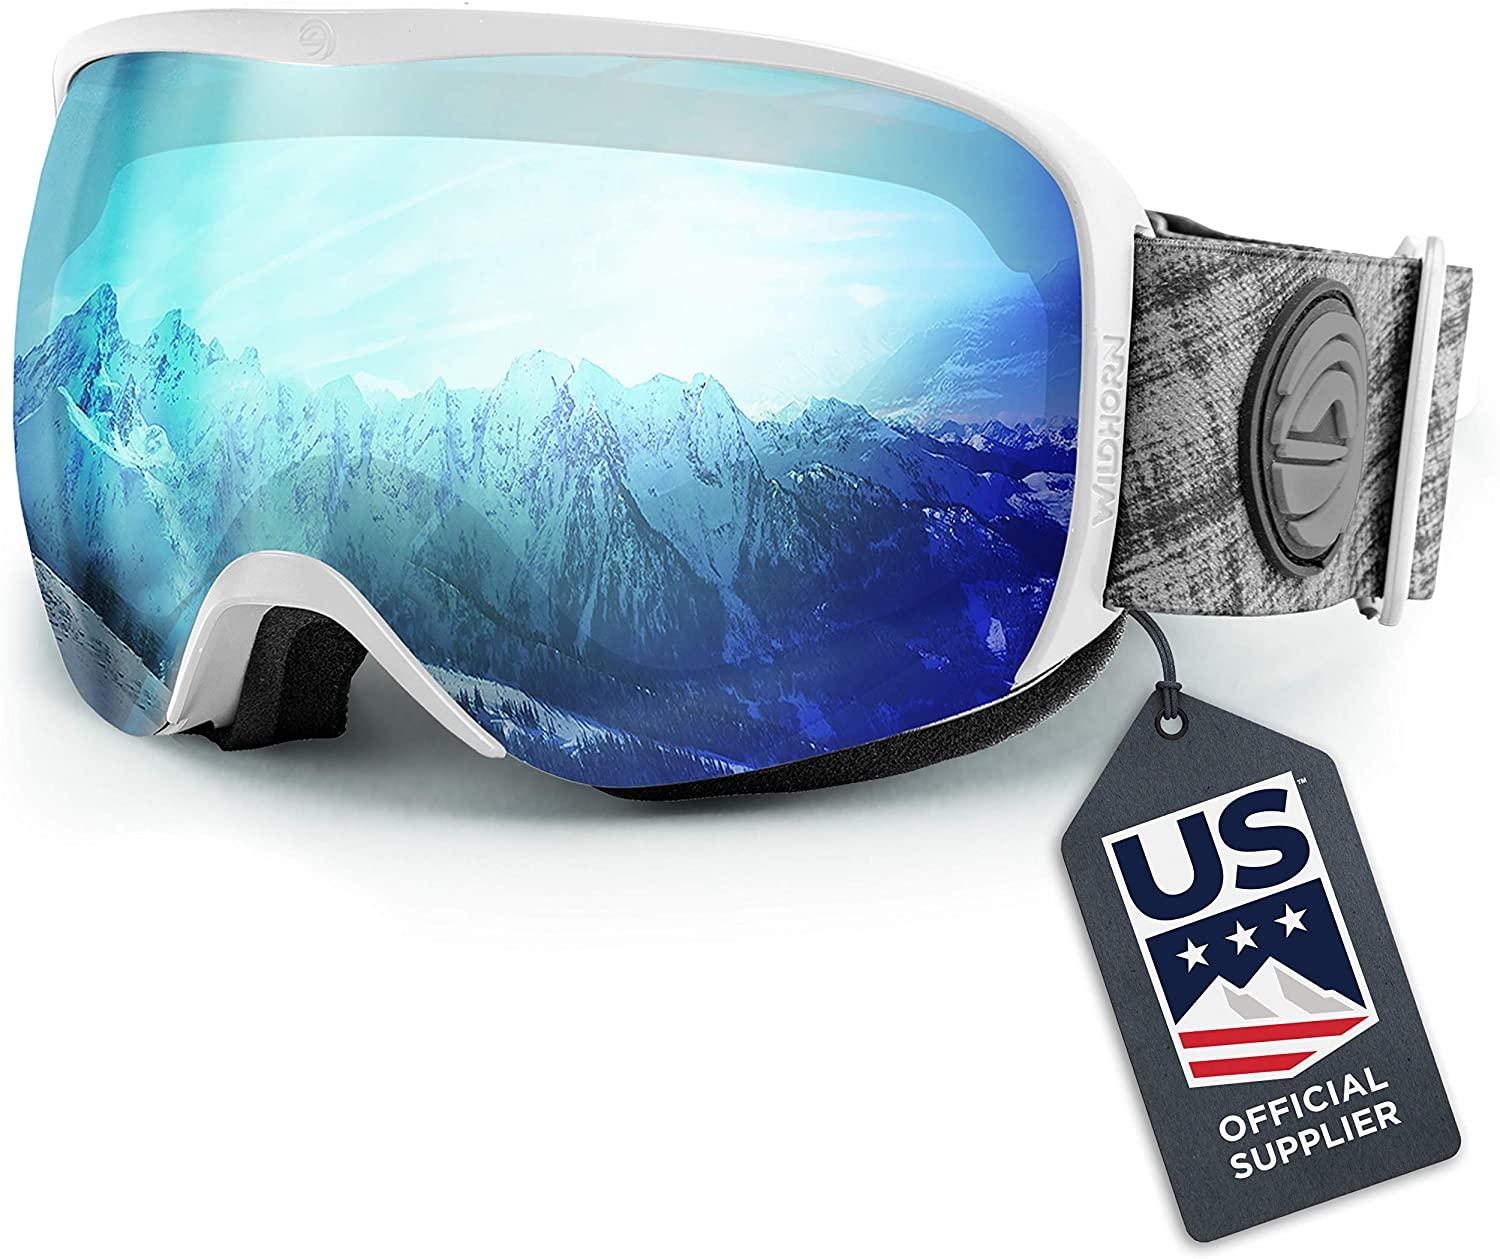 Wildhorn Cristo Ski Goggles for $29.99 Shipped